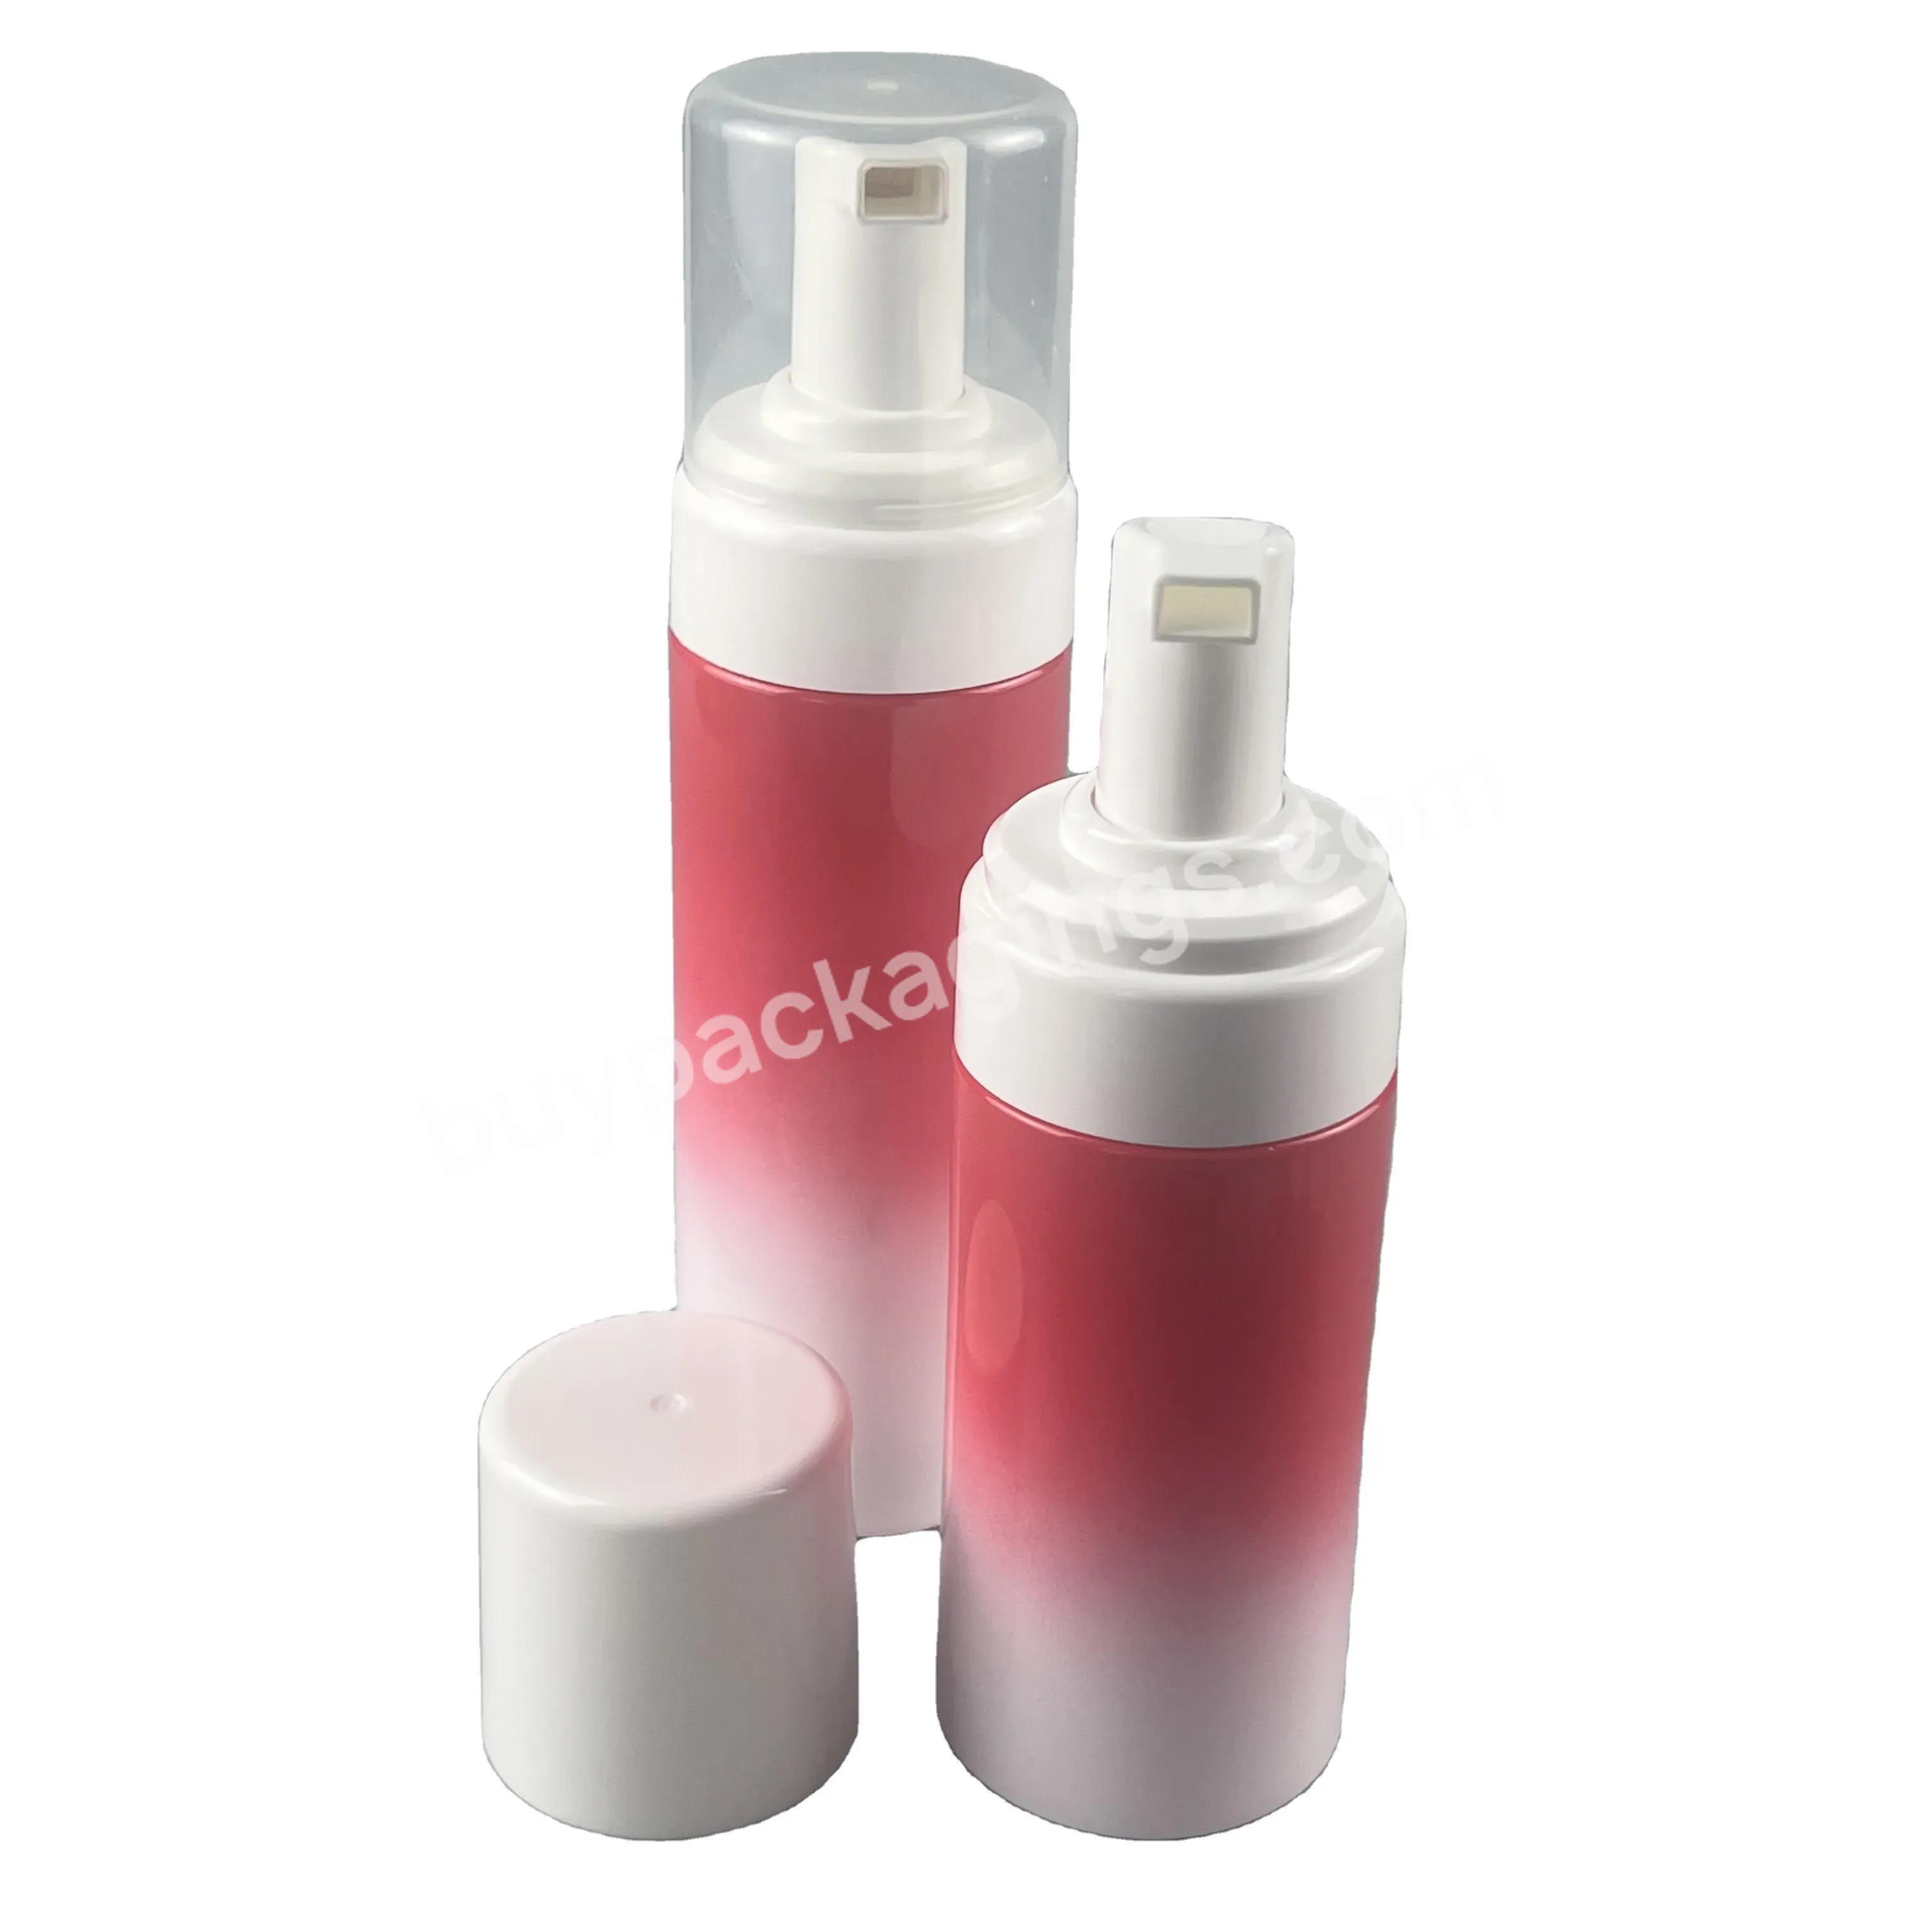 Cylinder Plastic Pet Liquid Soap Face Cleanser Foam Bottle With Foam Pump For Shampoo Body Wash Gel - Buy Soap Foam Pump Bottle,Face Cleanser Foam Bottle,Cylinder Plastic Pet.